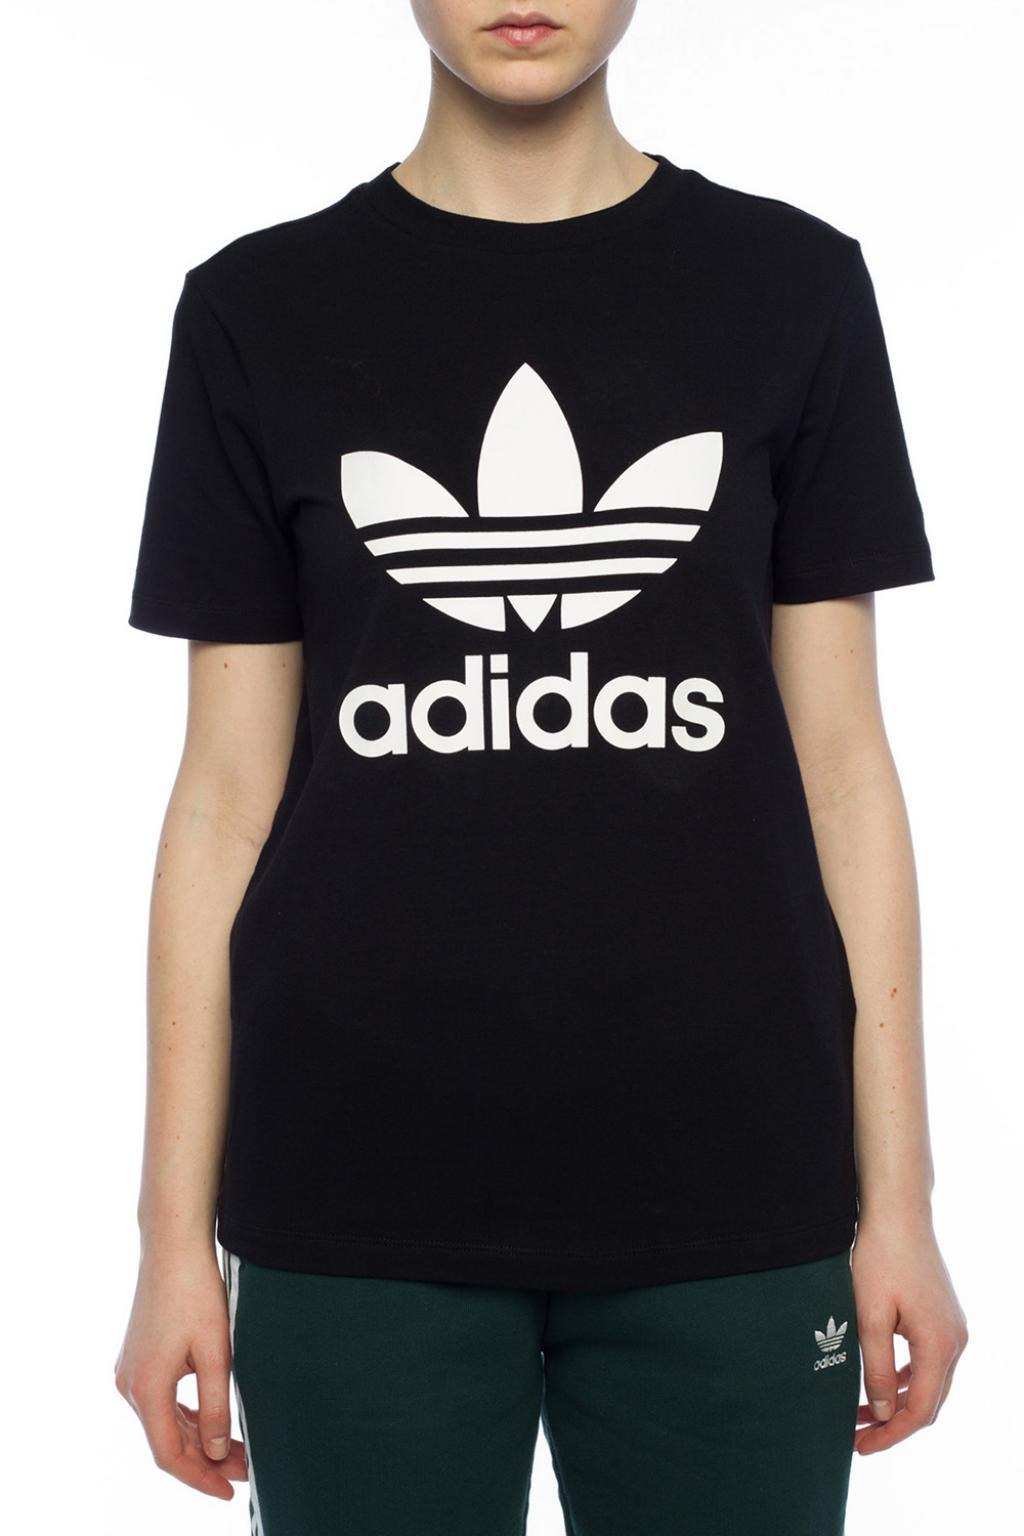 adidas Originals Cotton Logo T-shirt in Black - Lyst